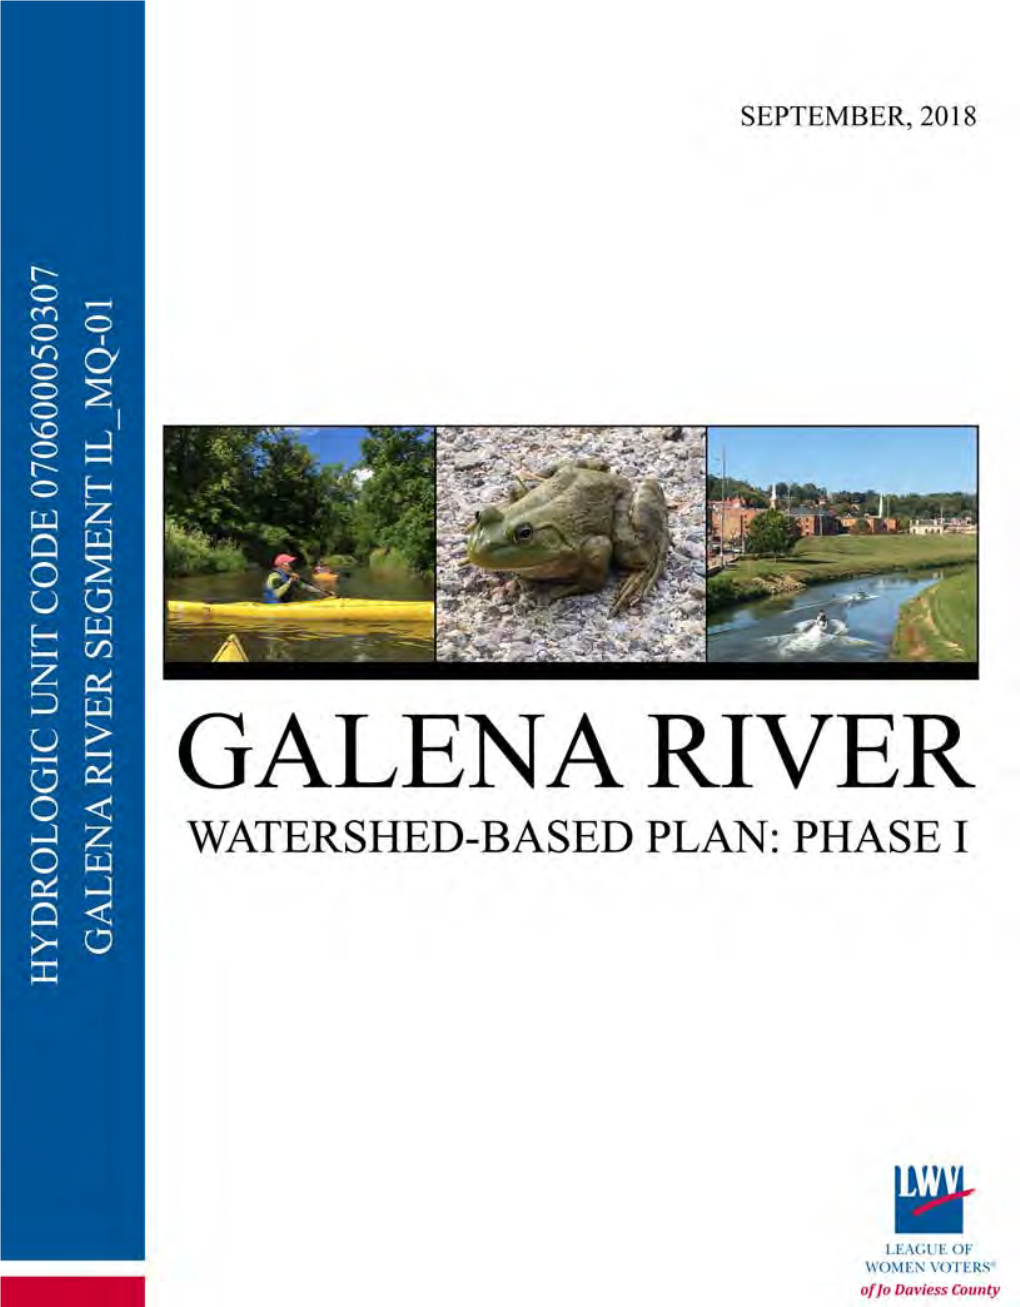 Galena River Watershed-Based Plan: Phase 1